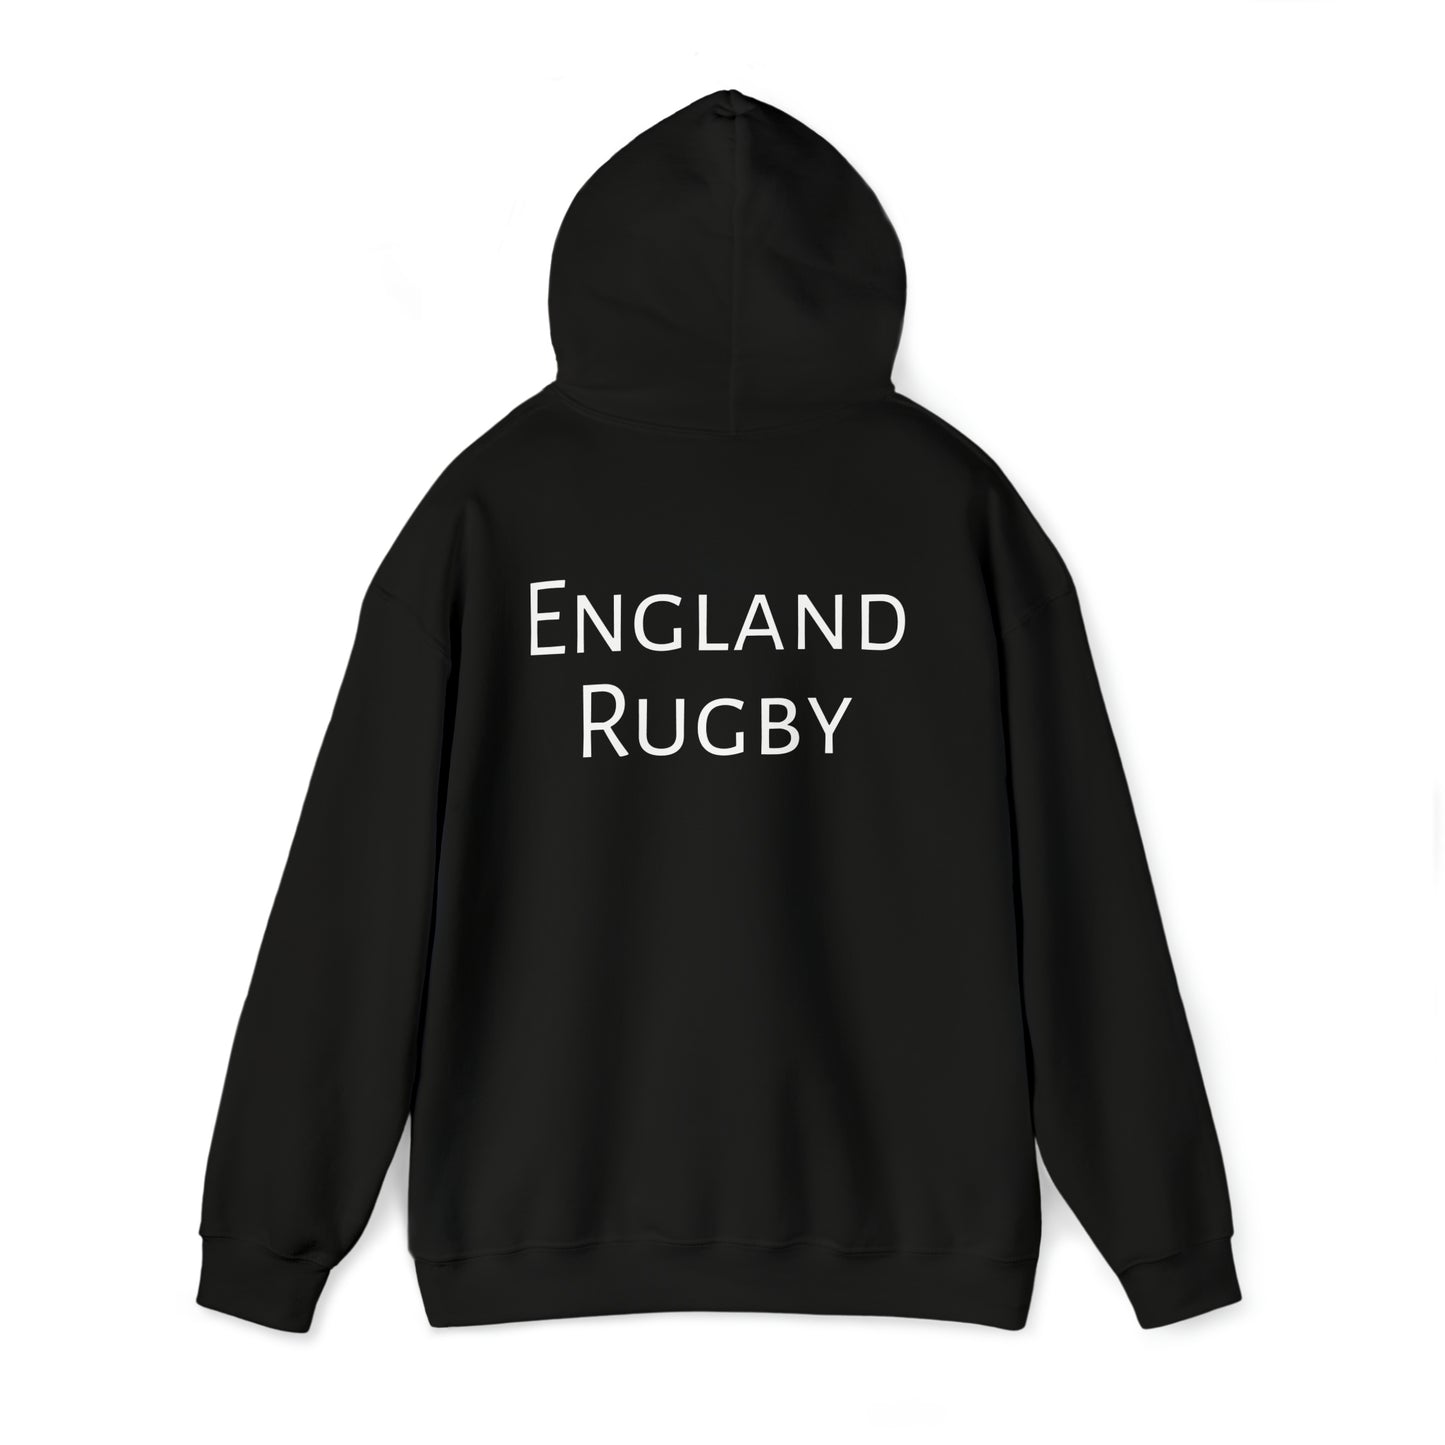 England Ready Team - dark hoodies